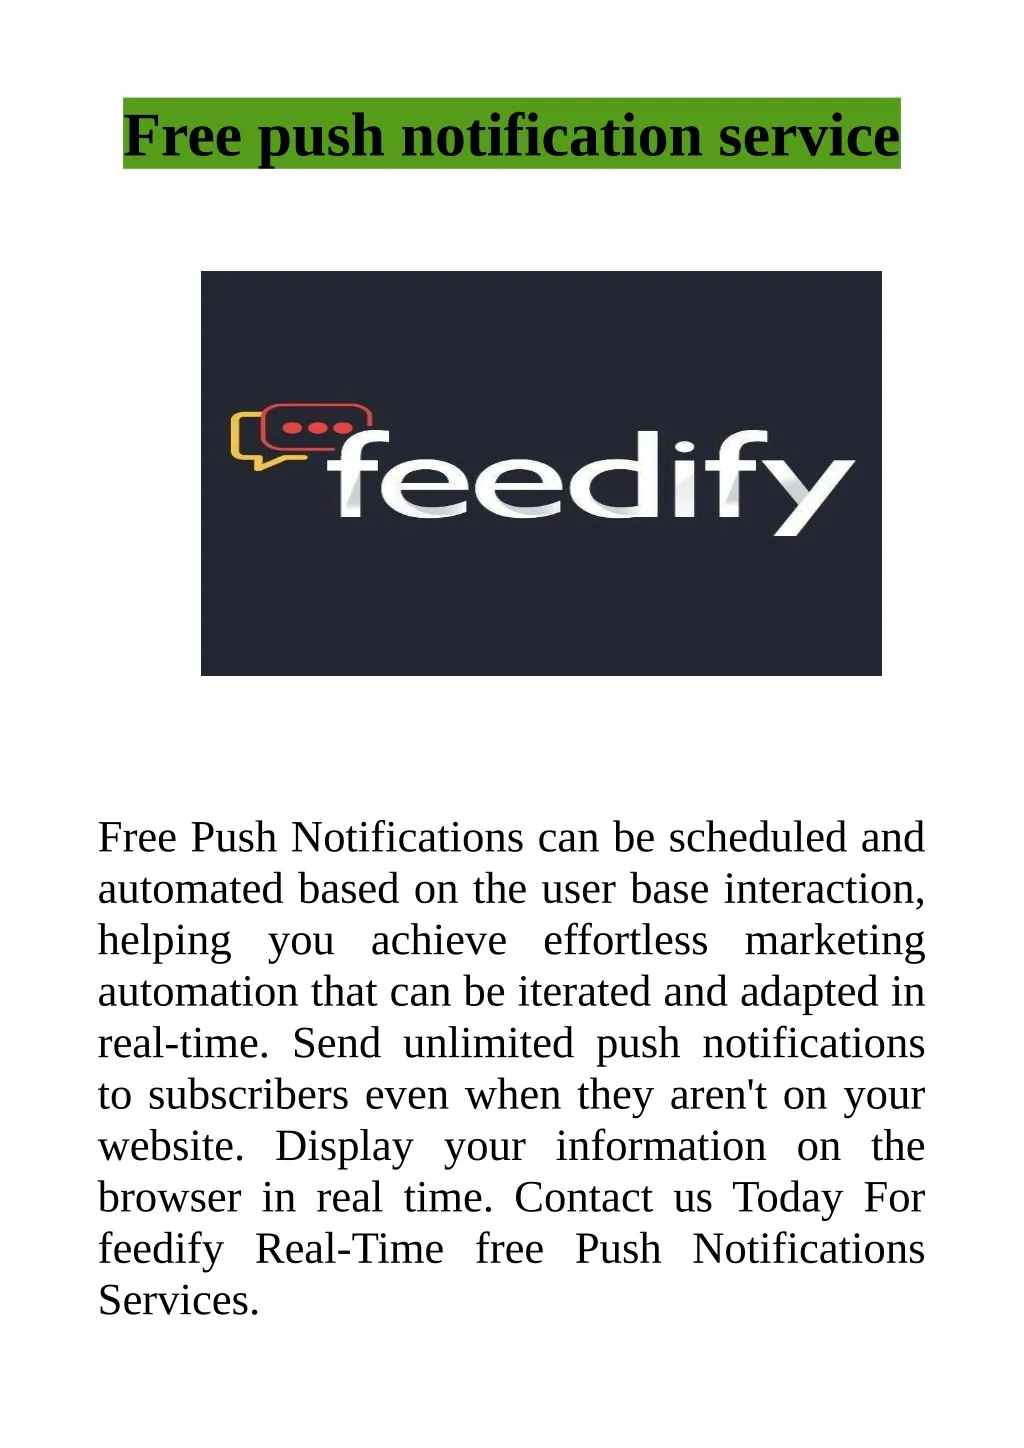 free push notification service